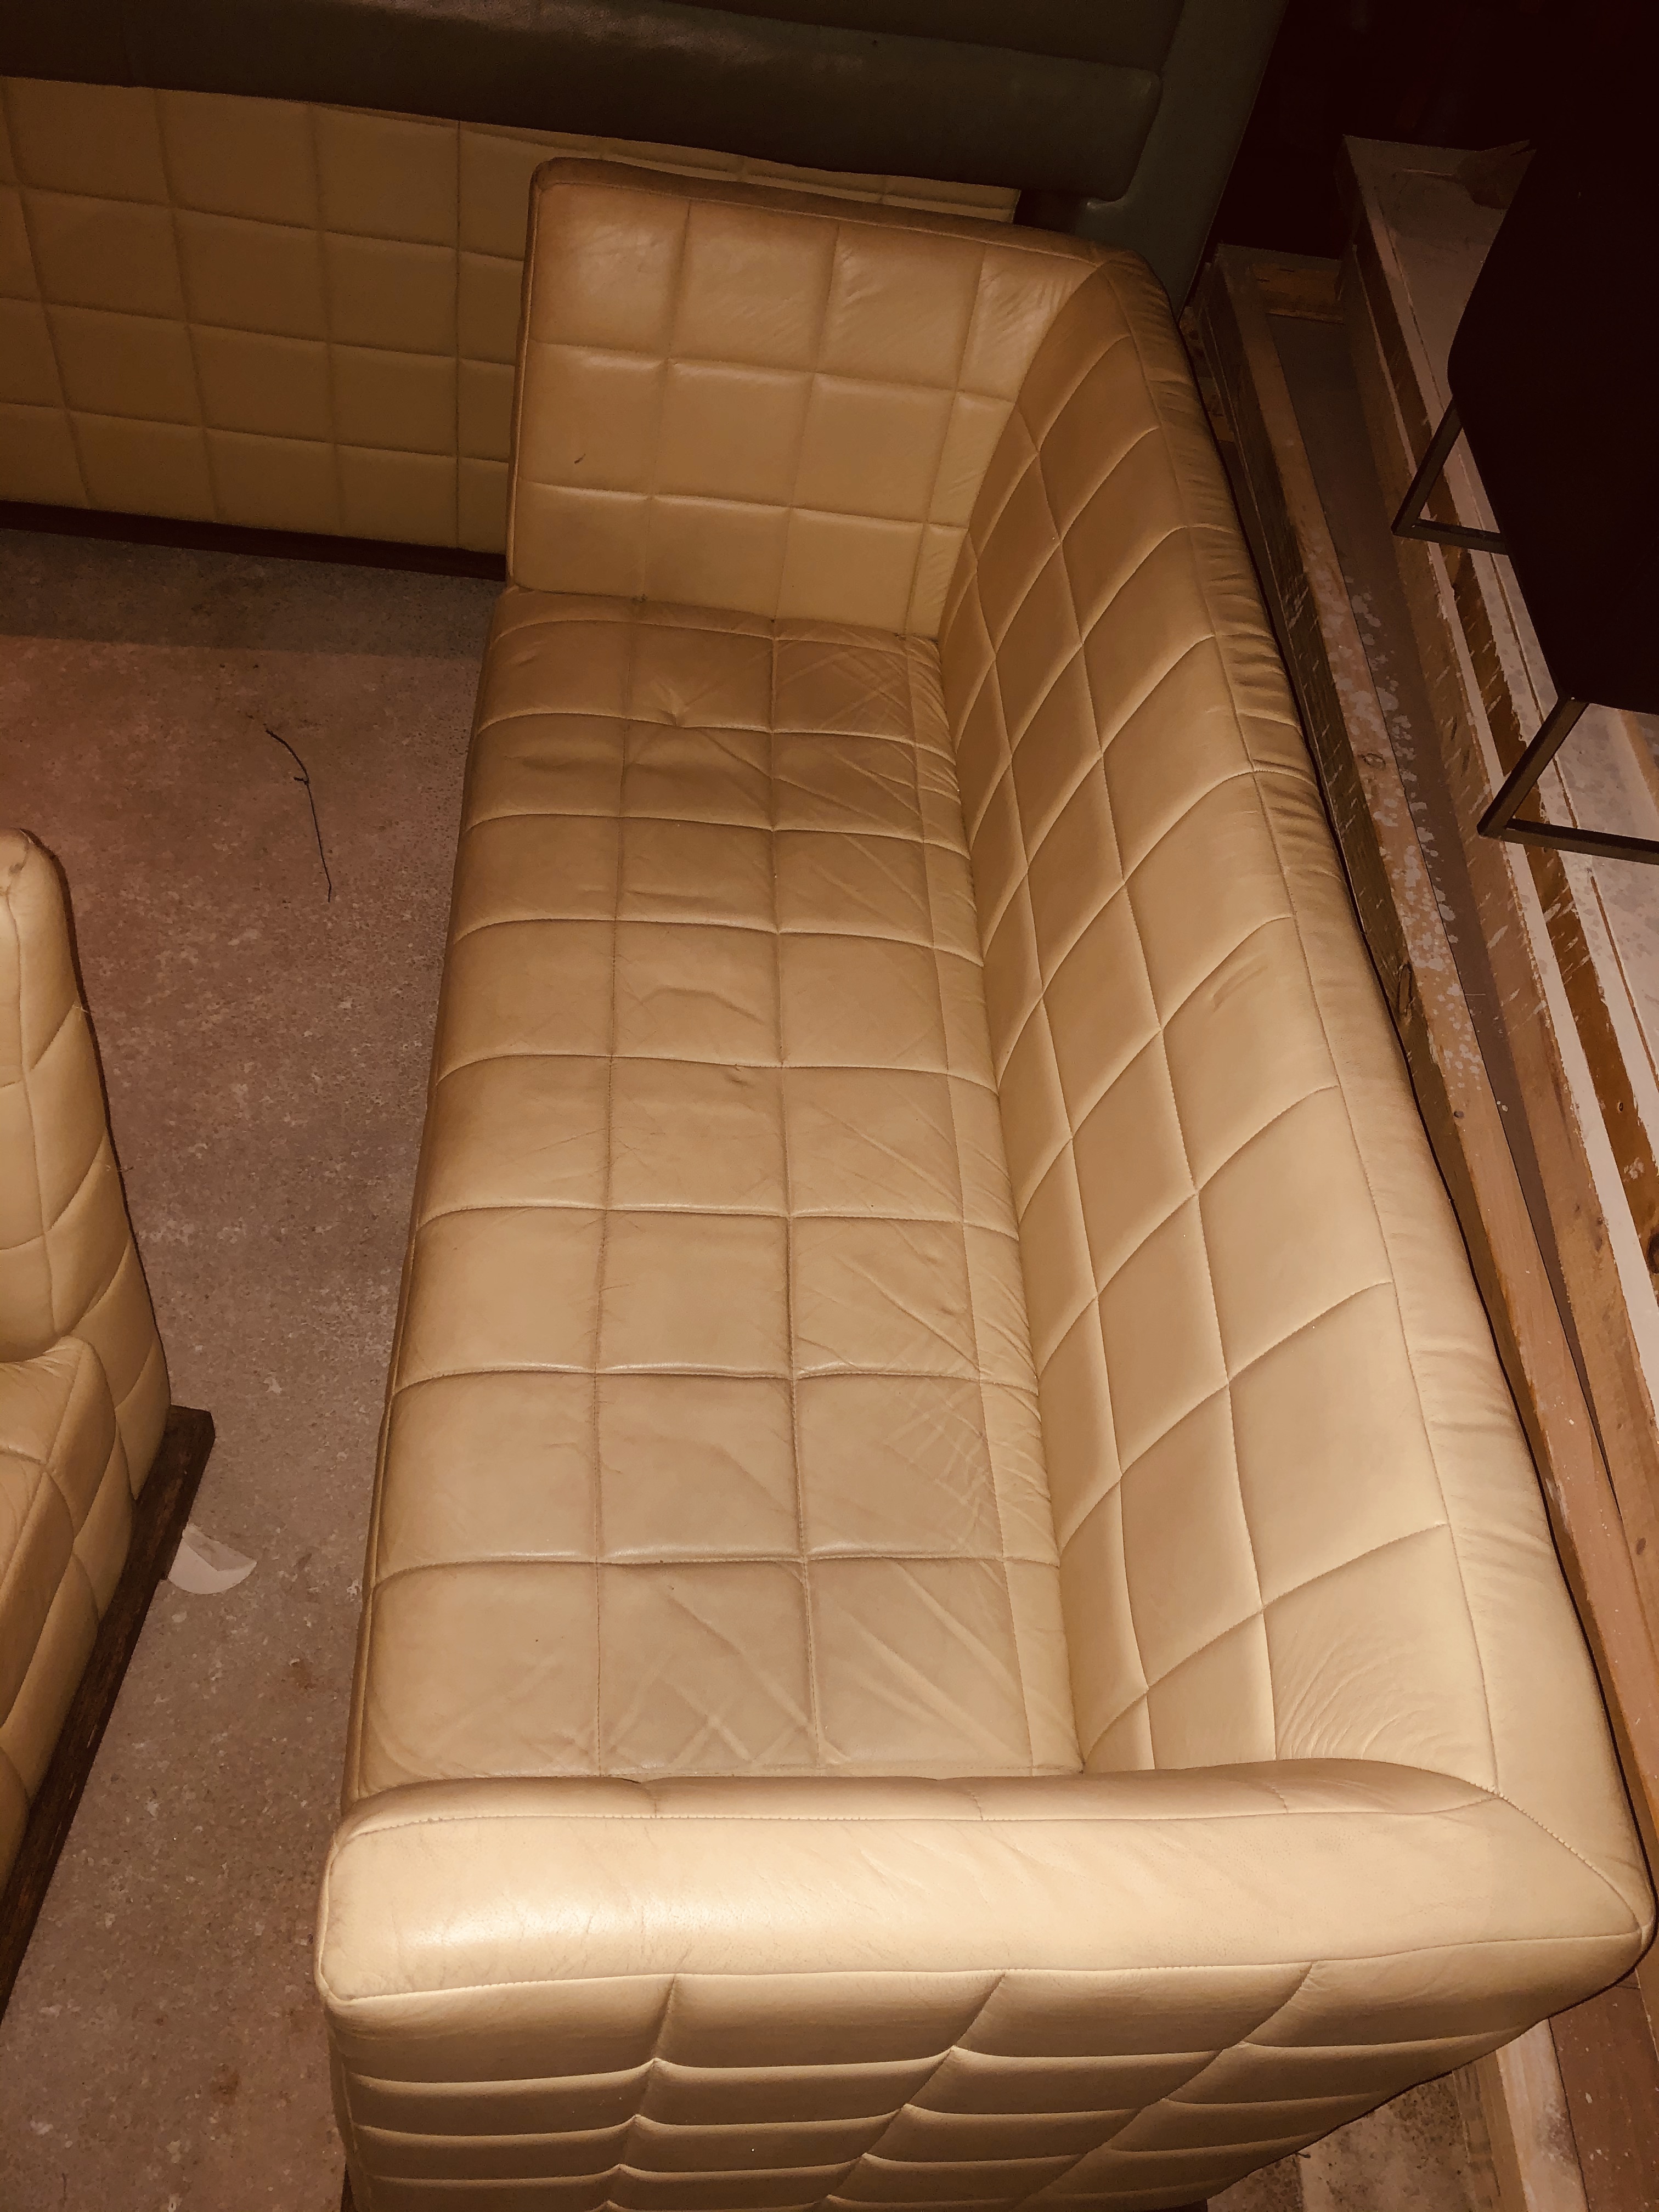 1x medium 2 seater white padded sofa - Image 3 of 3